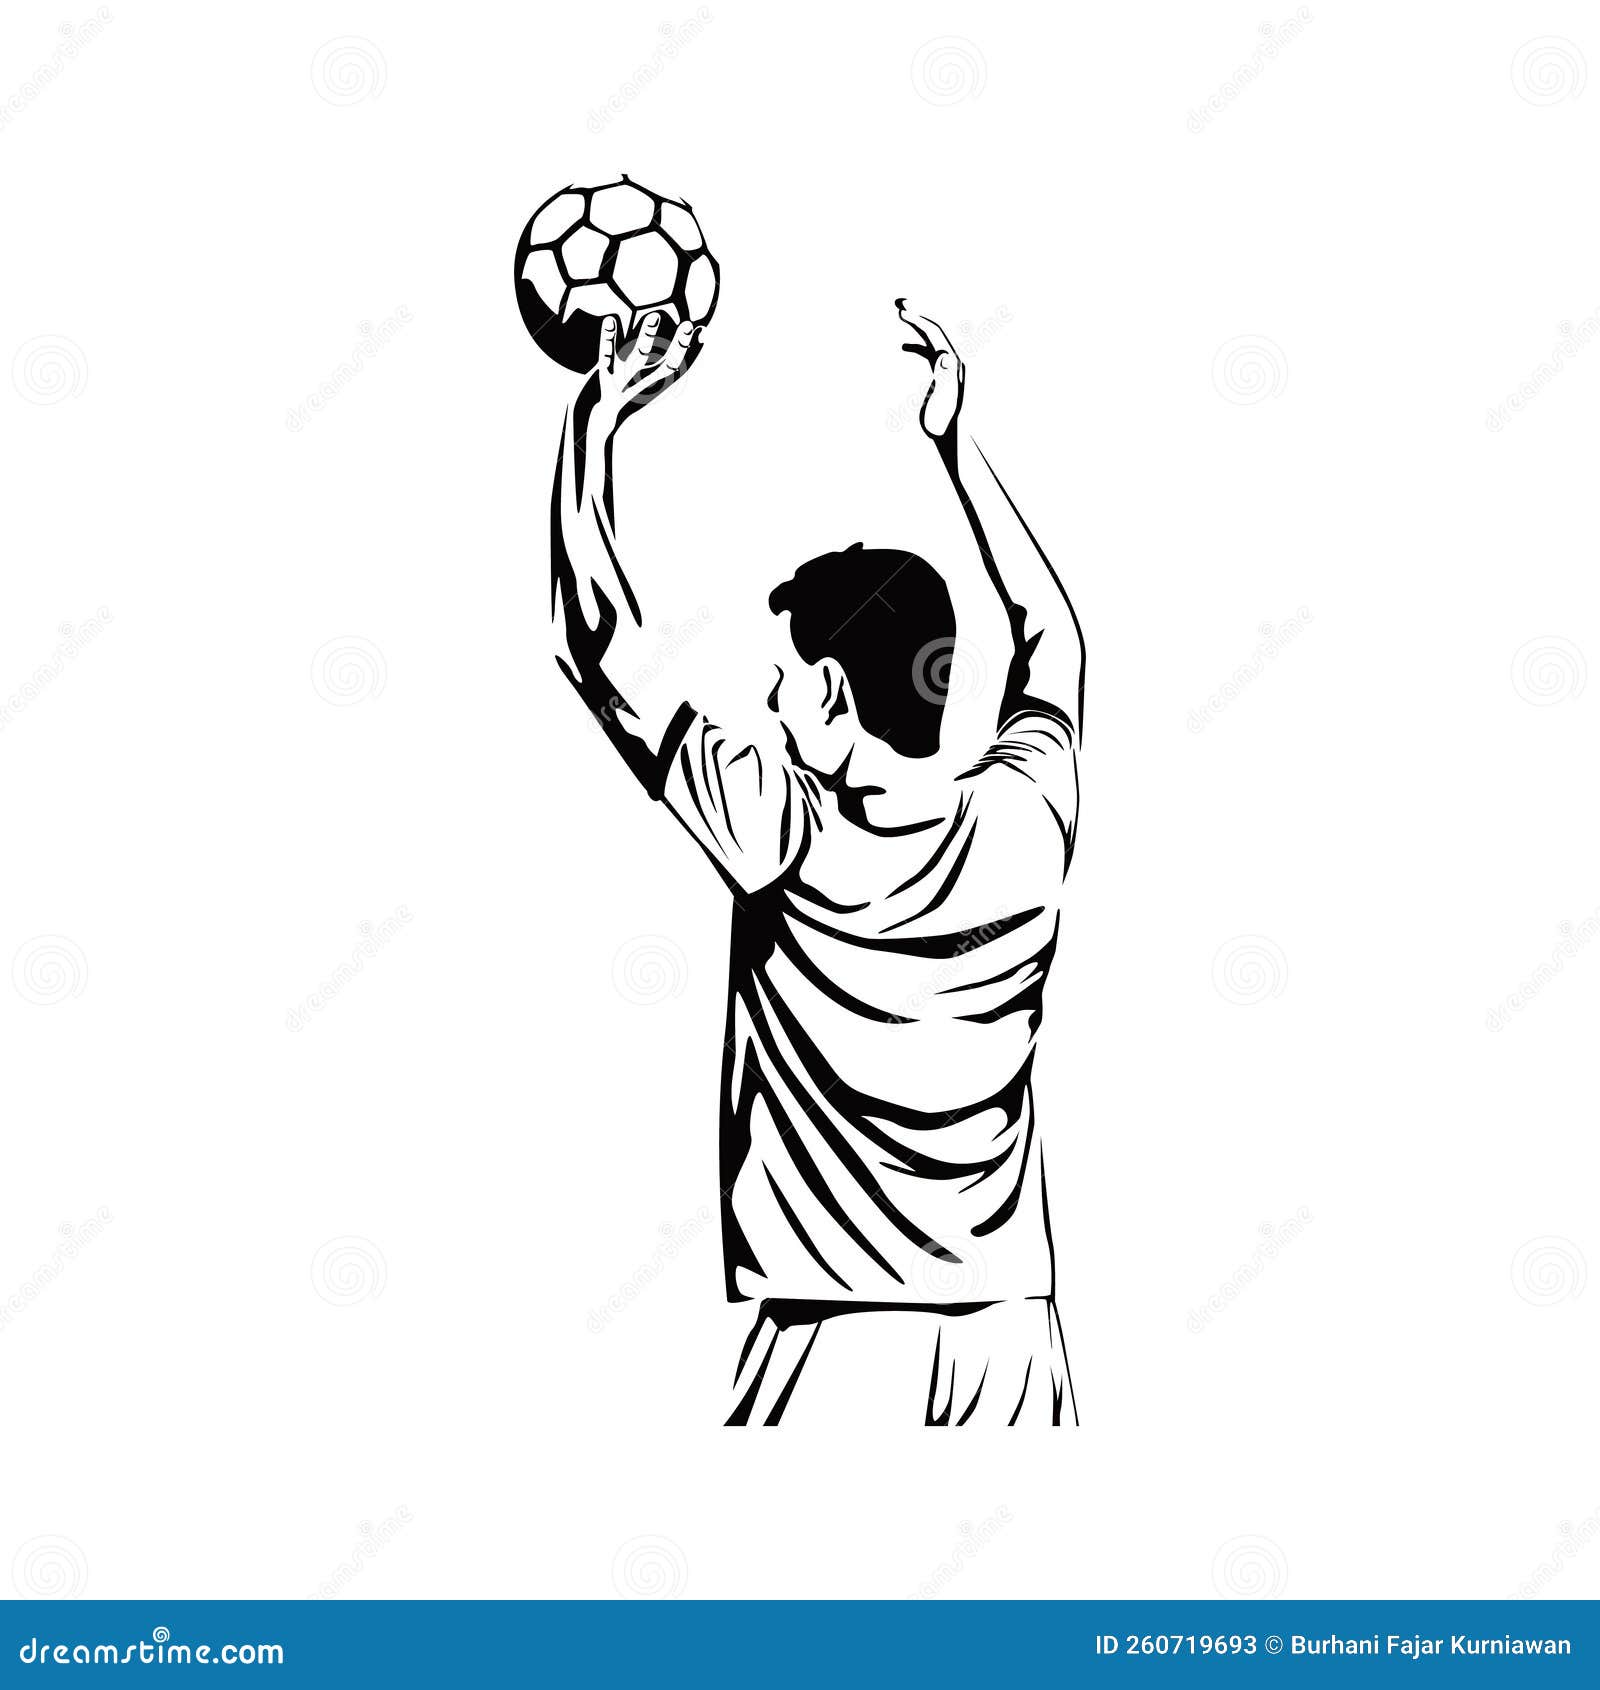 Man Football Player Silhouette Design Stock Vector - Illustration of ...